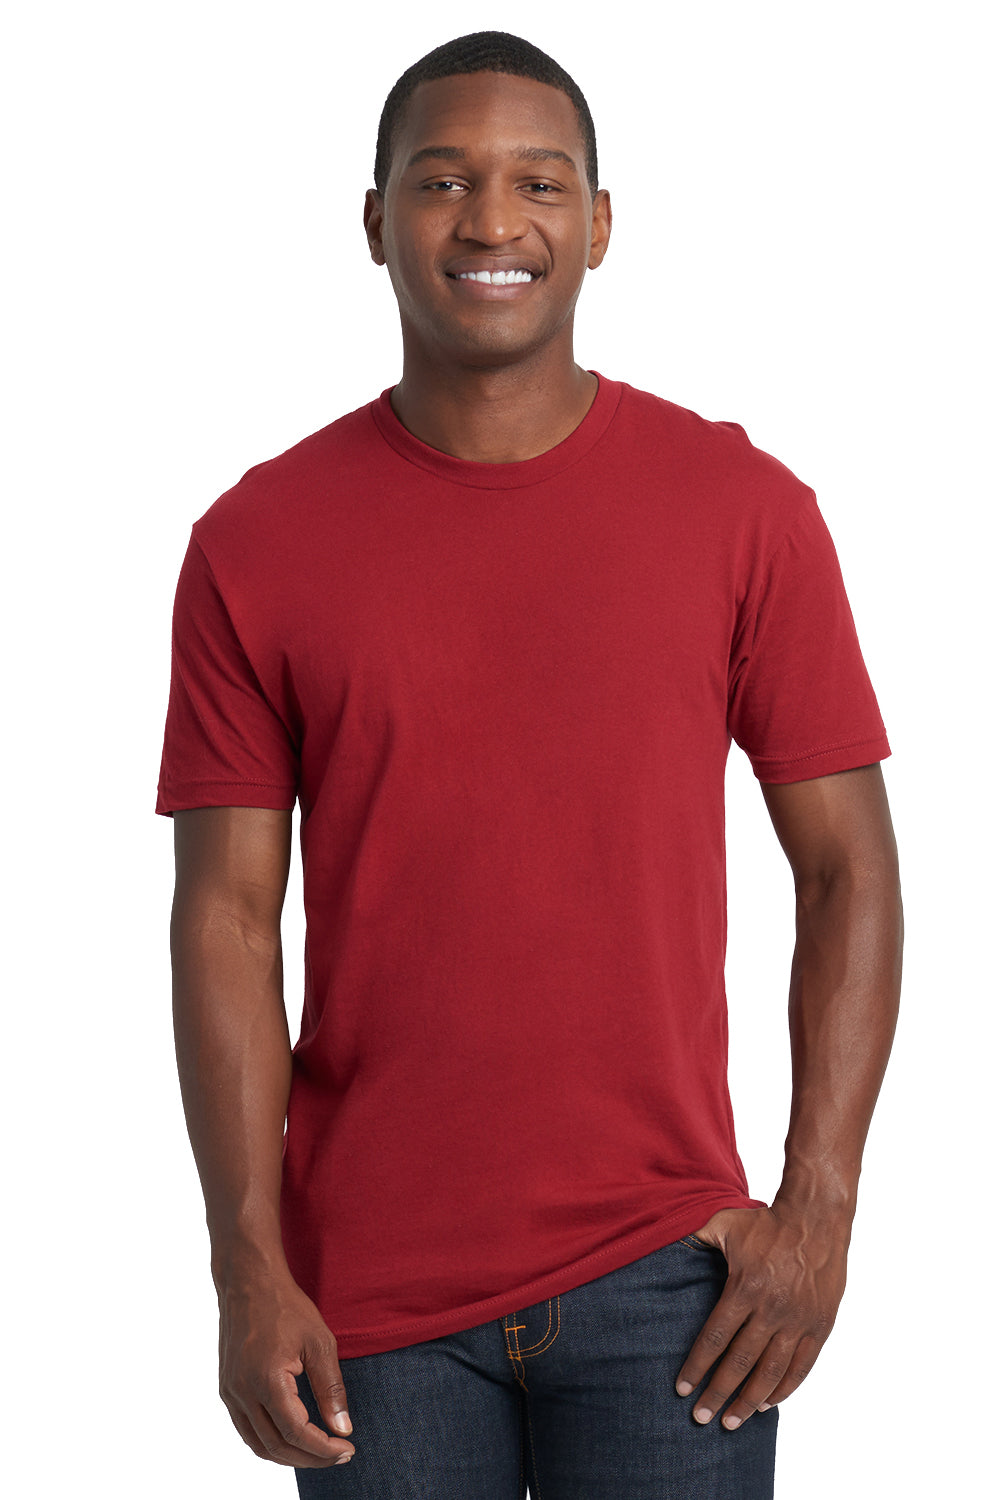 Next Level 3600 Mens Fine Jersey Short Sleeve Crewneck T-Shirt Cardinal Red Front